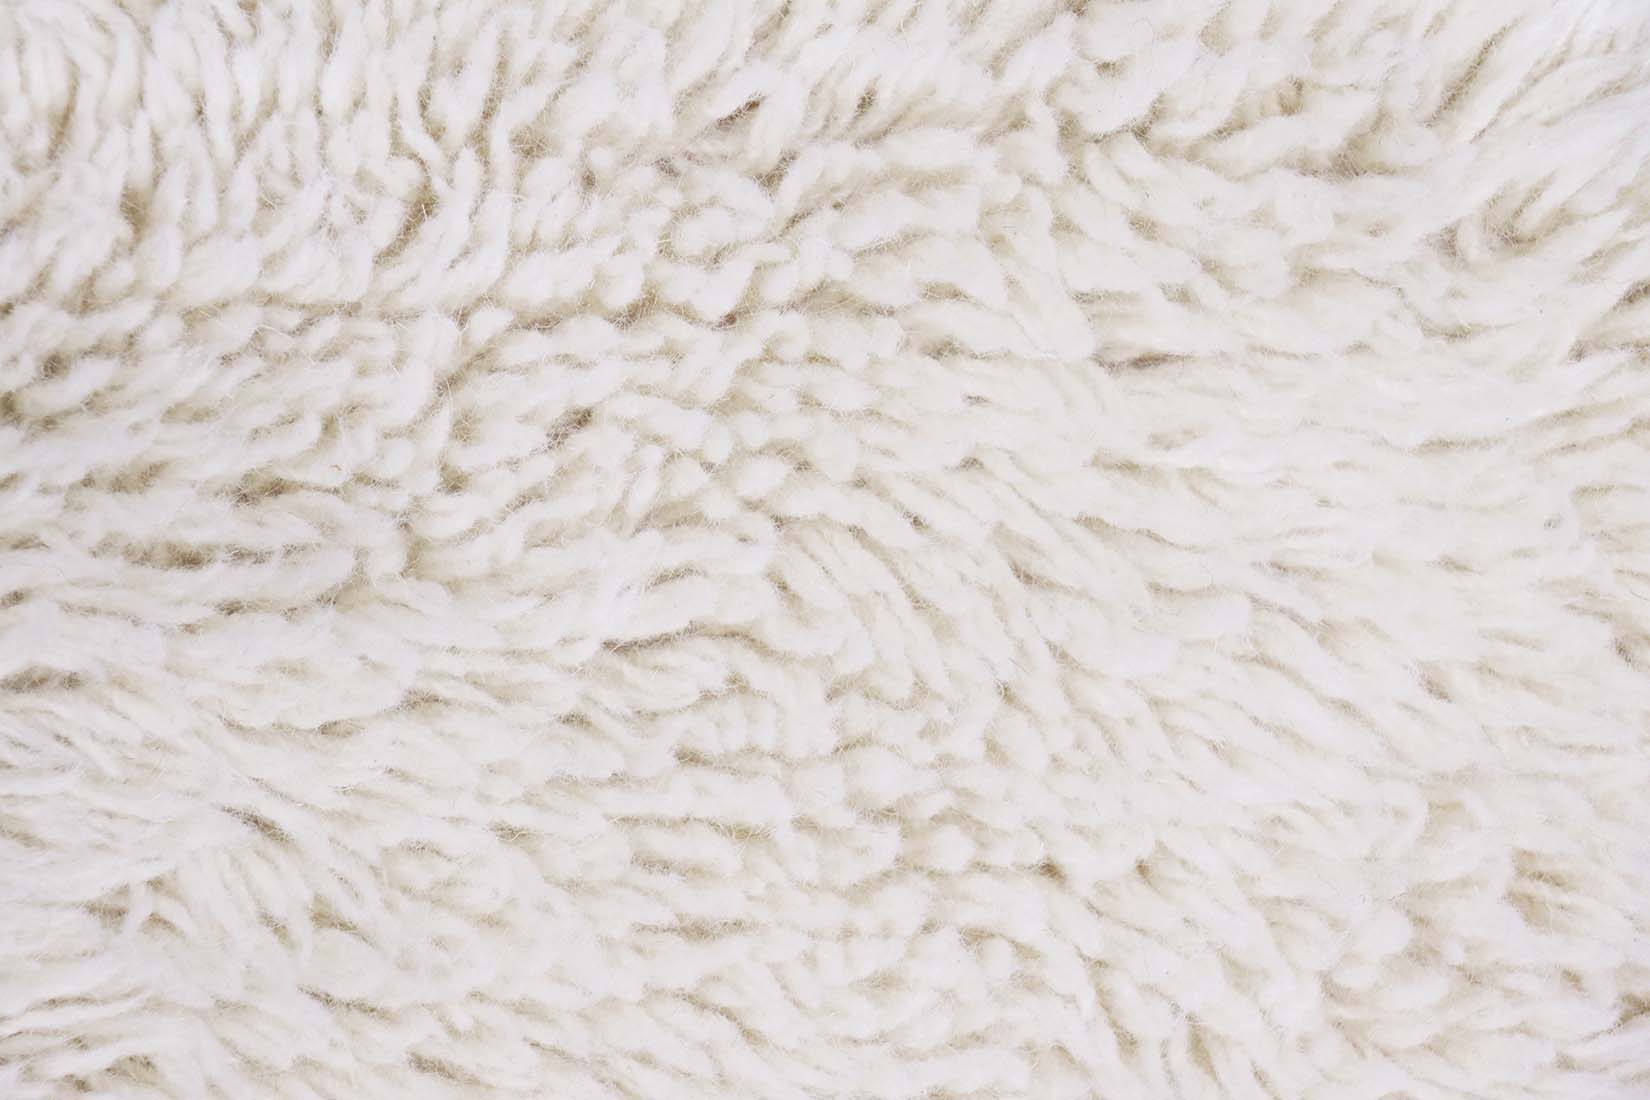 cream washable wool sheepskin rug
